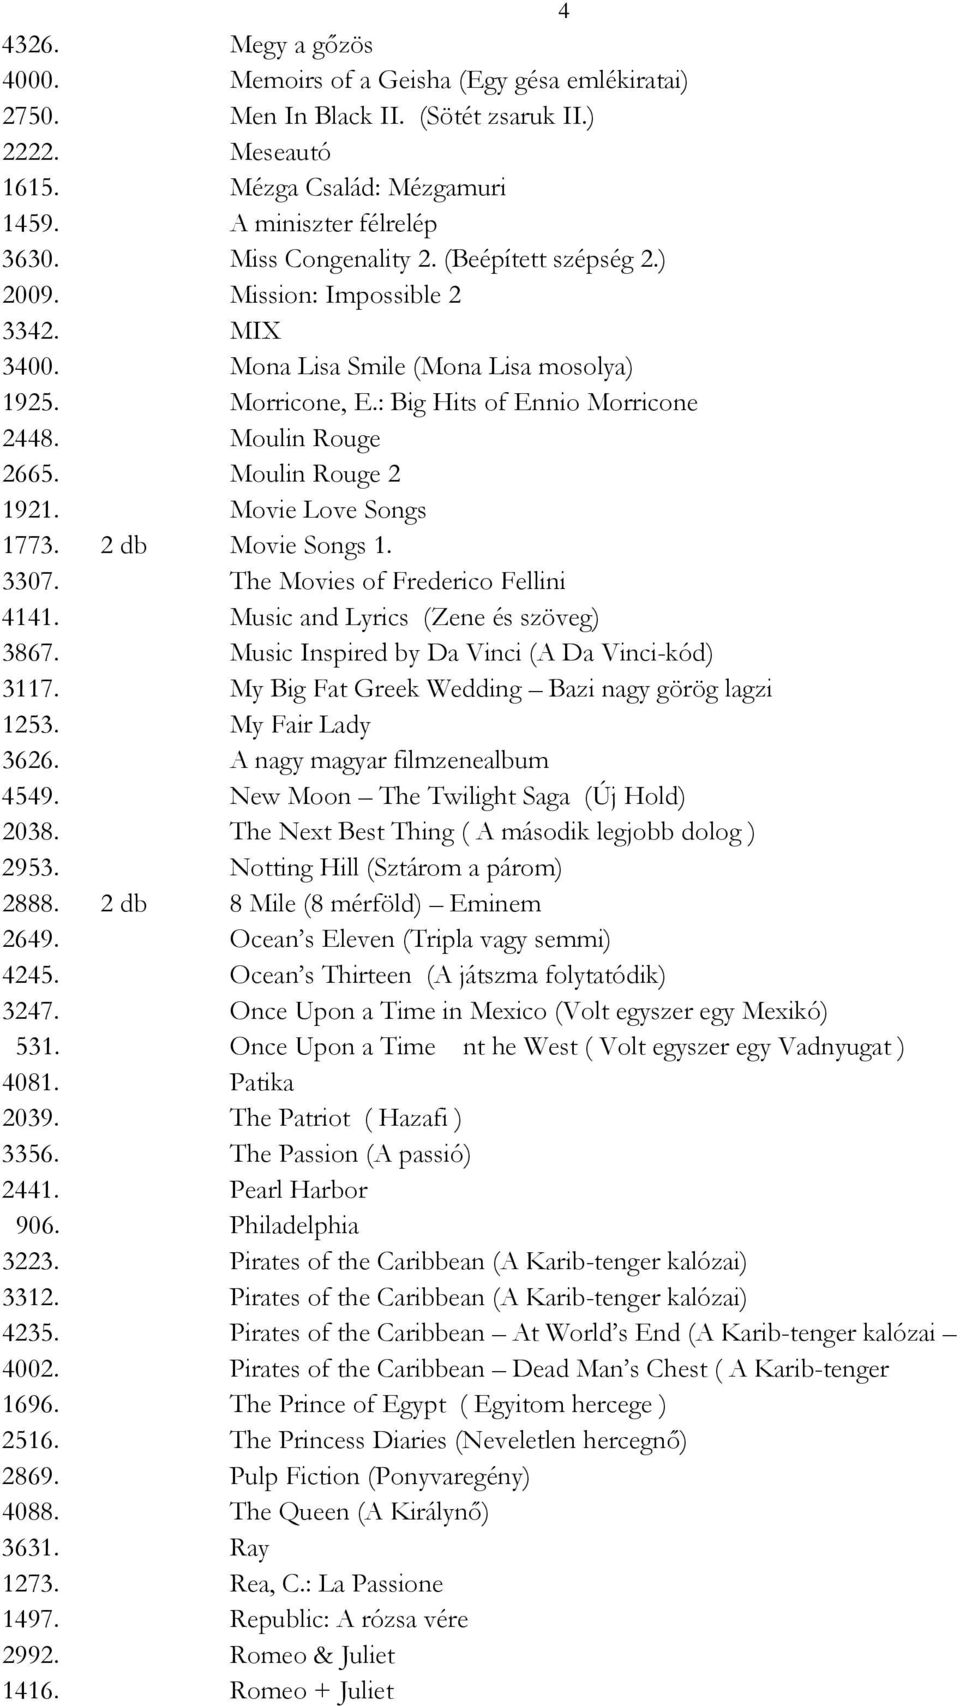 Moulin Rouge 2 1921. Movie Love Songs 1773. 2 db Movie Songs 1. 3307. The Movies of Frederico Fellini 4141. Music and Lyrics (Zene és szöveg) 3867. Music Inspired by Da Vinci (A Da Vinci-kód) 3117.